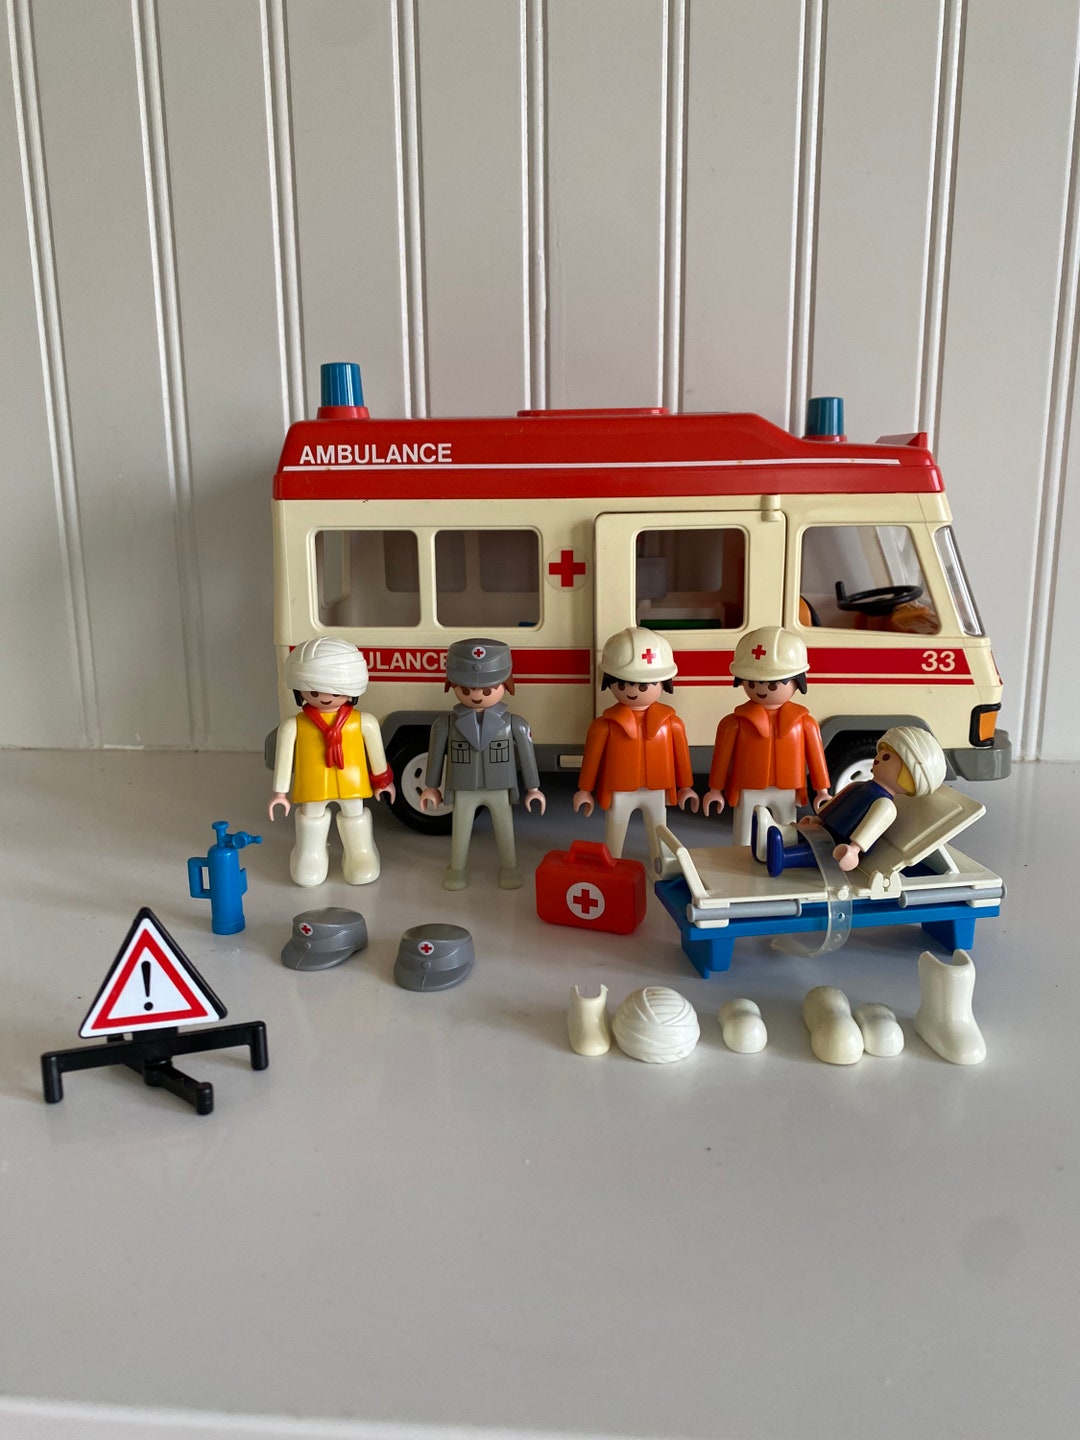 PLAYMOBIL Ambulance by PLAYMOBIL